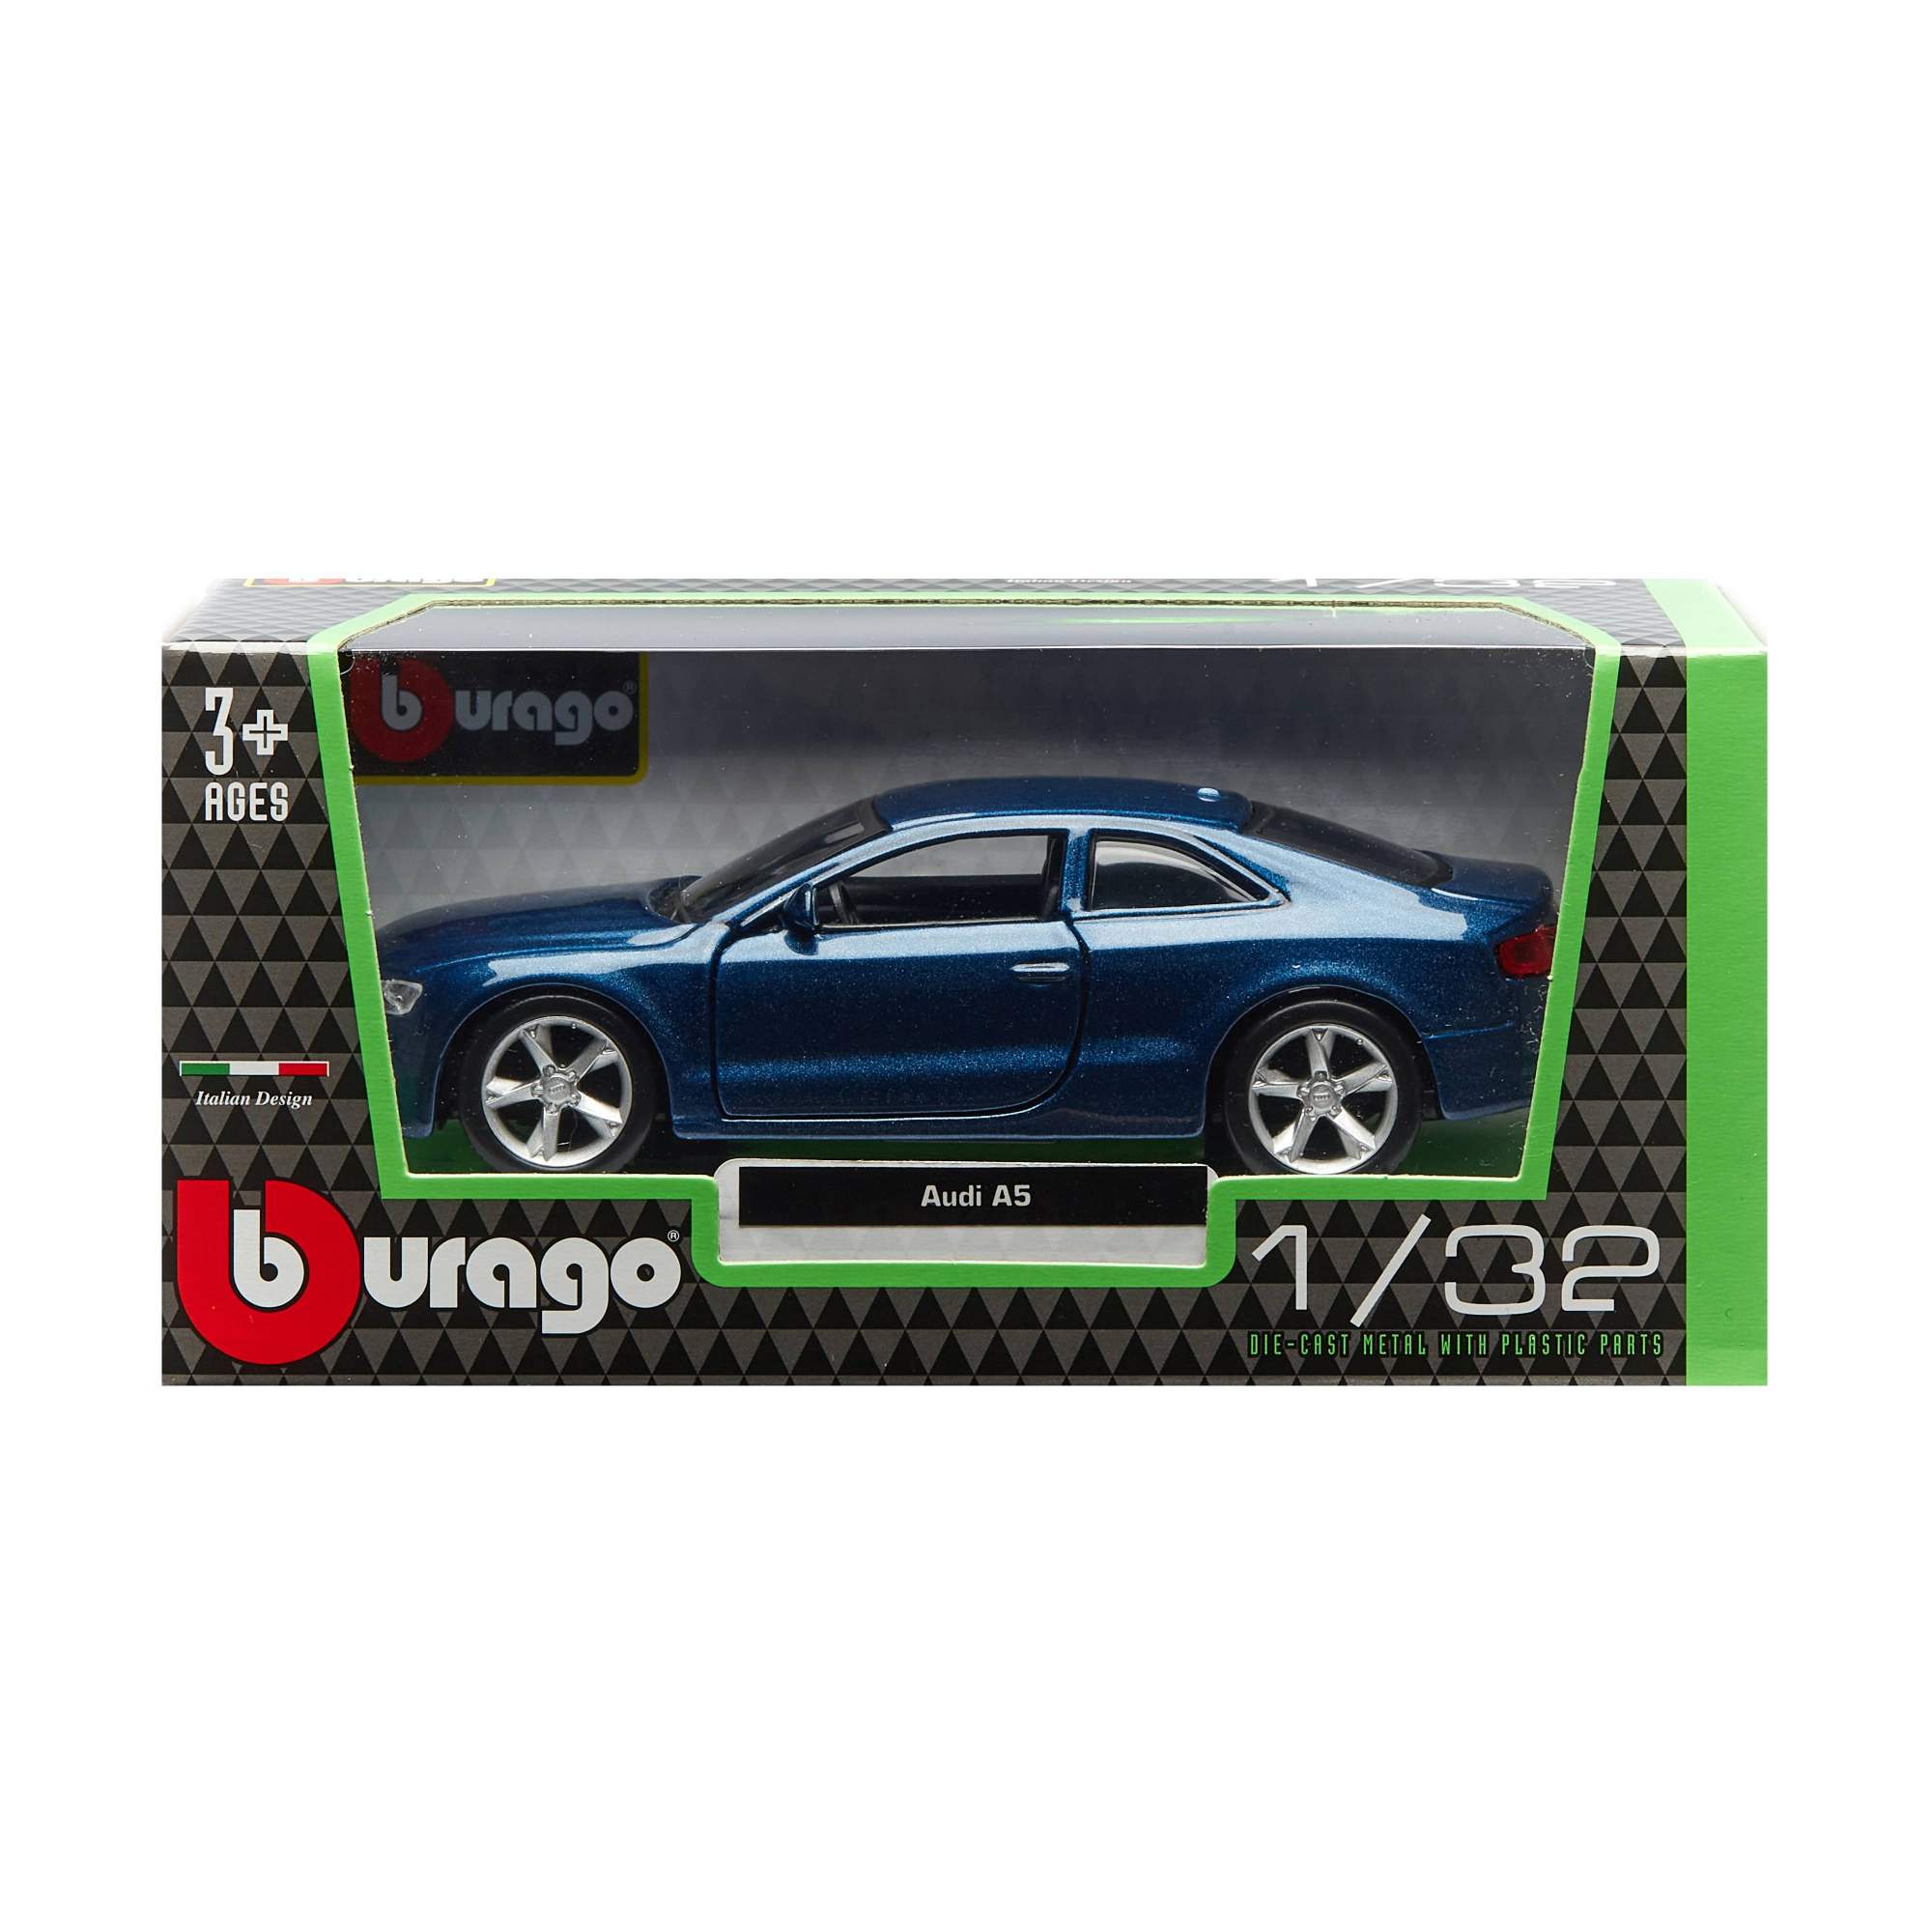 Автомобиль Bburago Audi A5 1:32 Ауди А5 43008 - фото 1